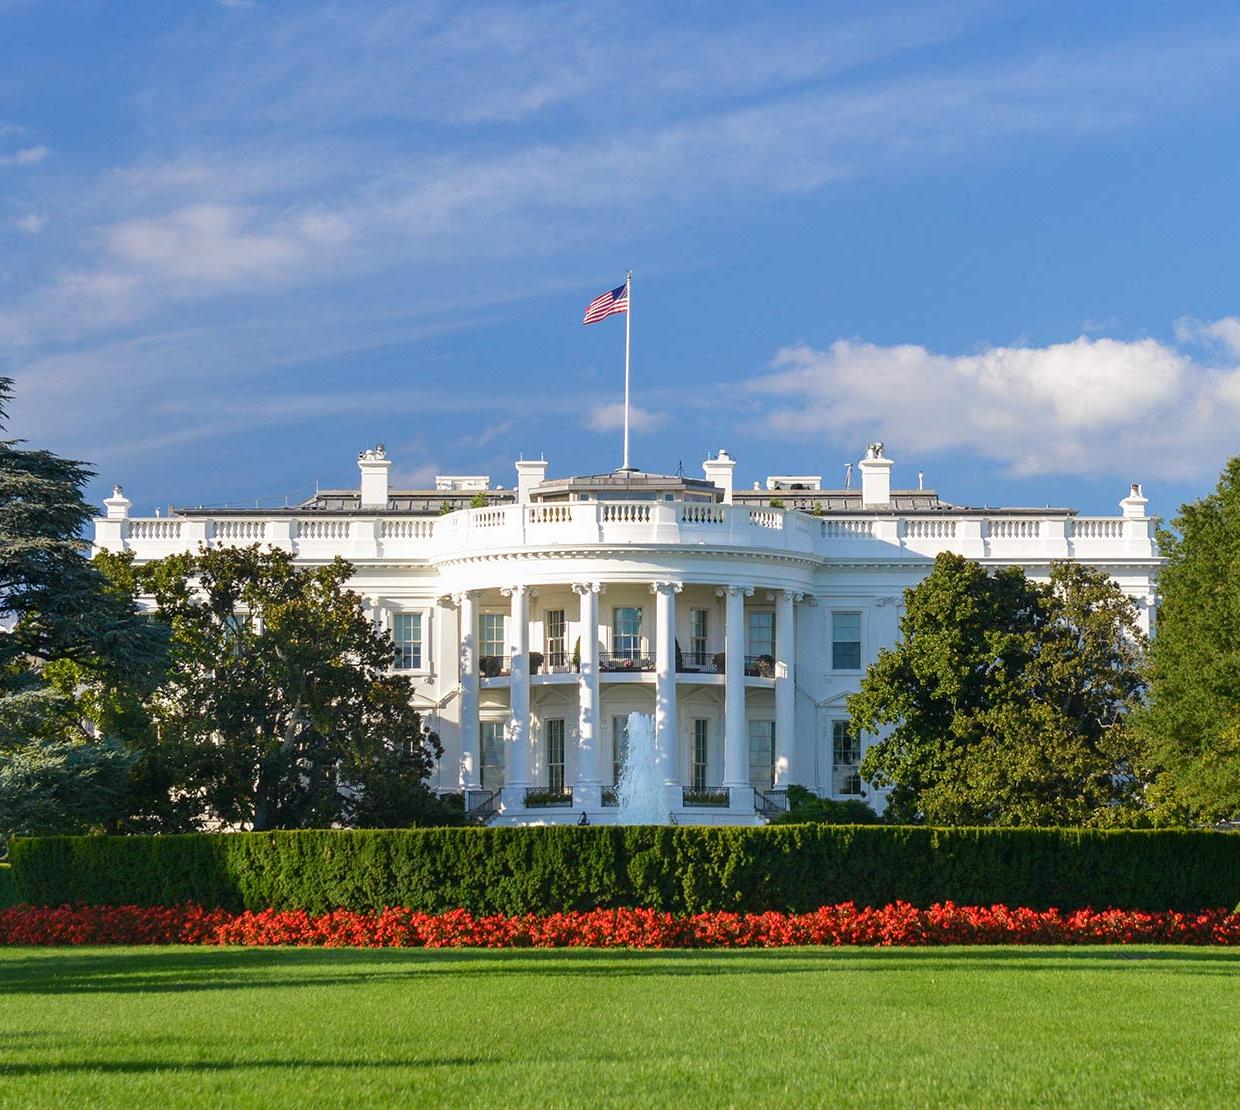 The White House entrance